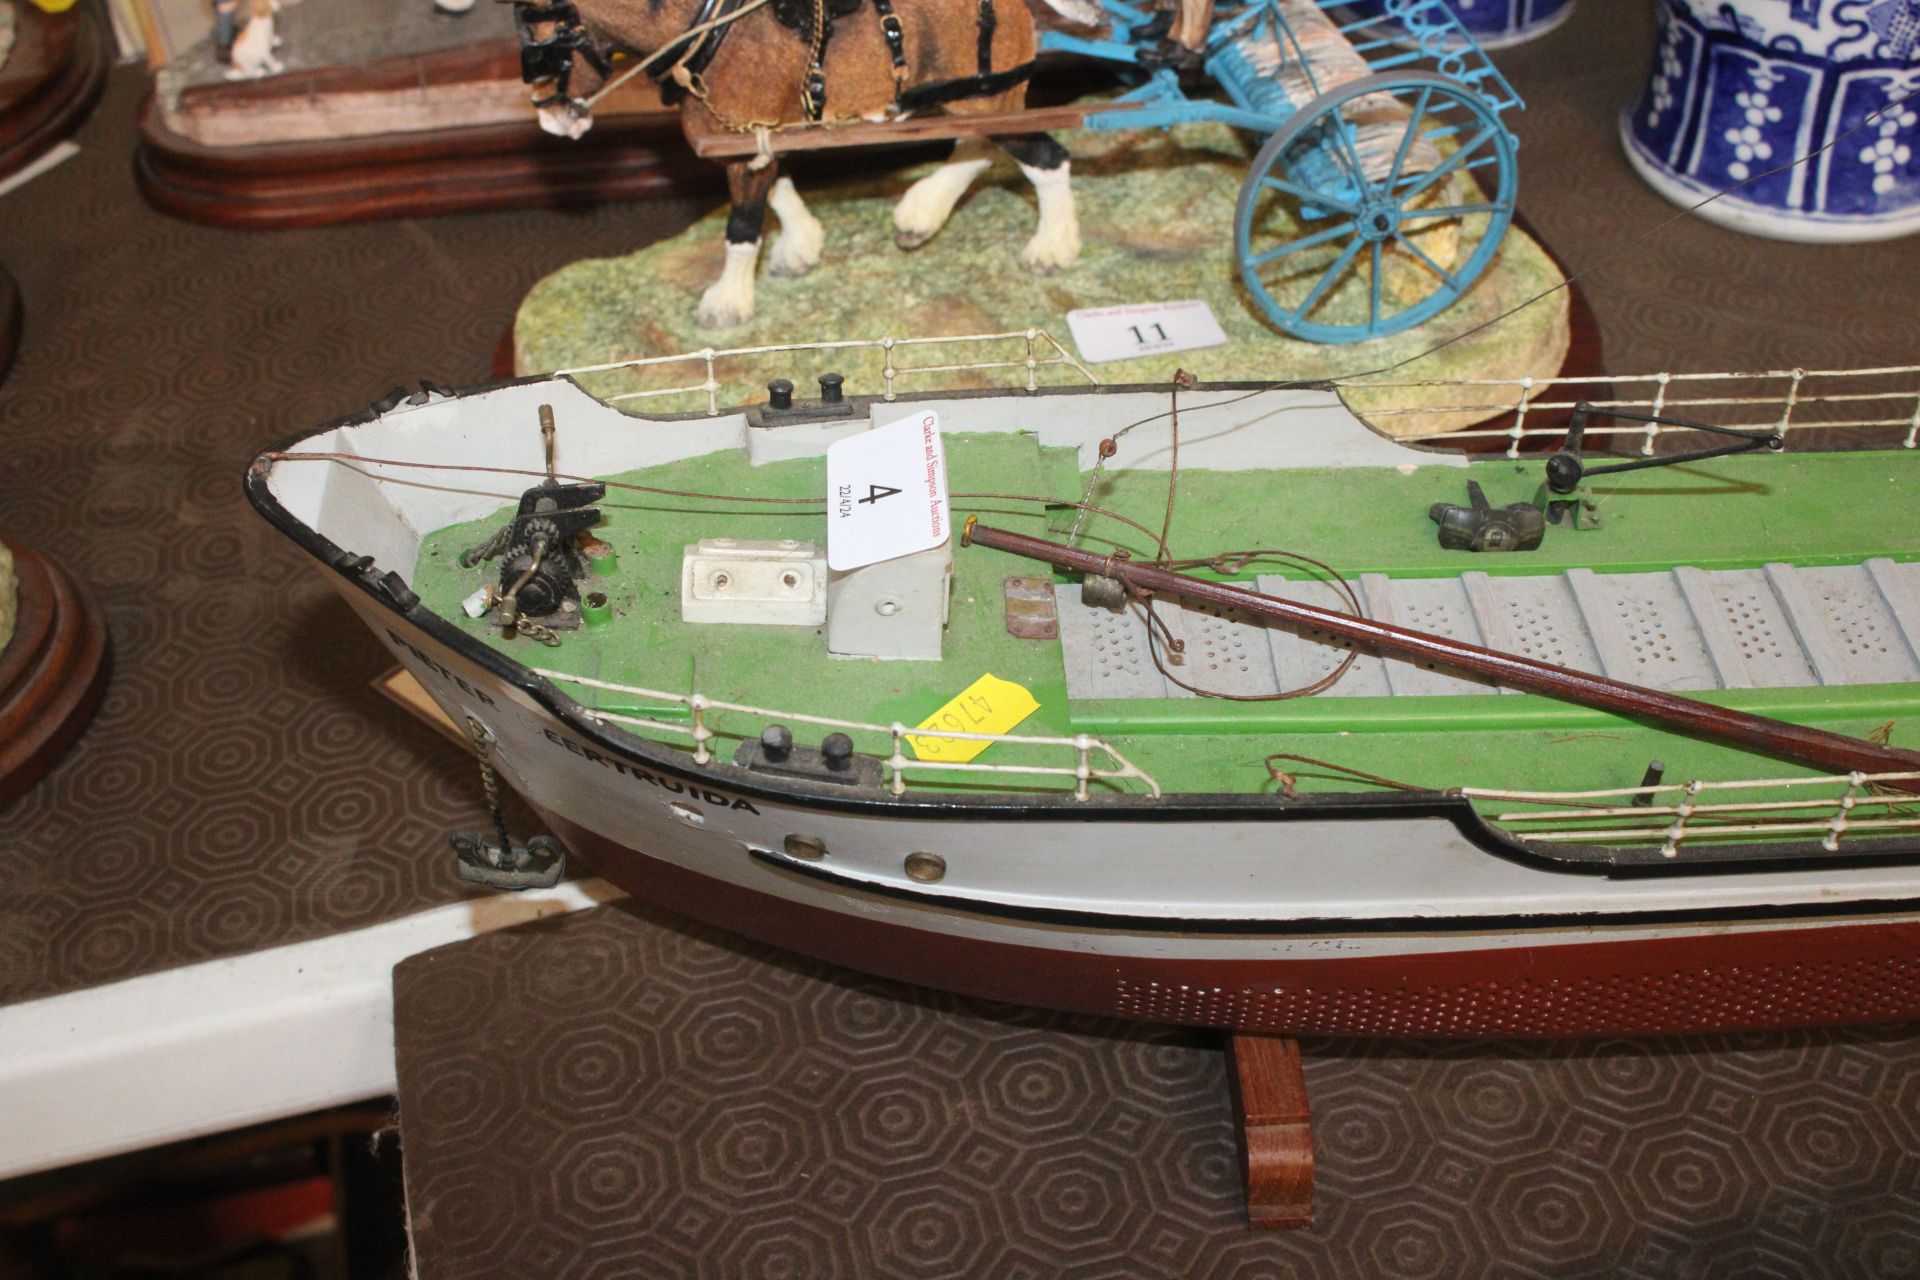 A model of the cargo ship "Peiter Geertruida" - Image 4 of 7